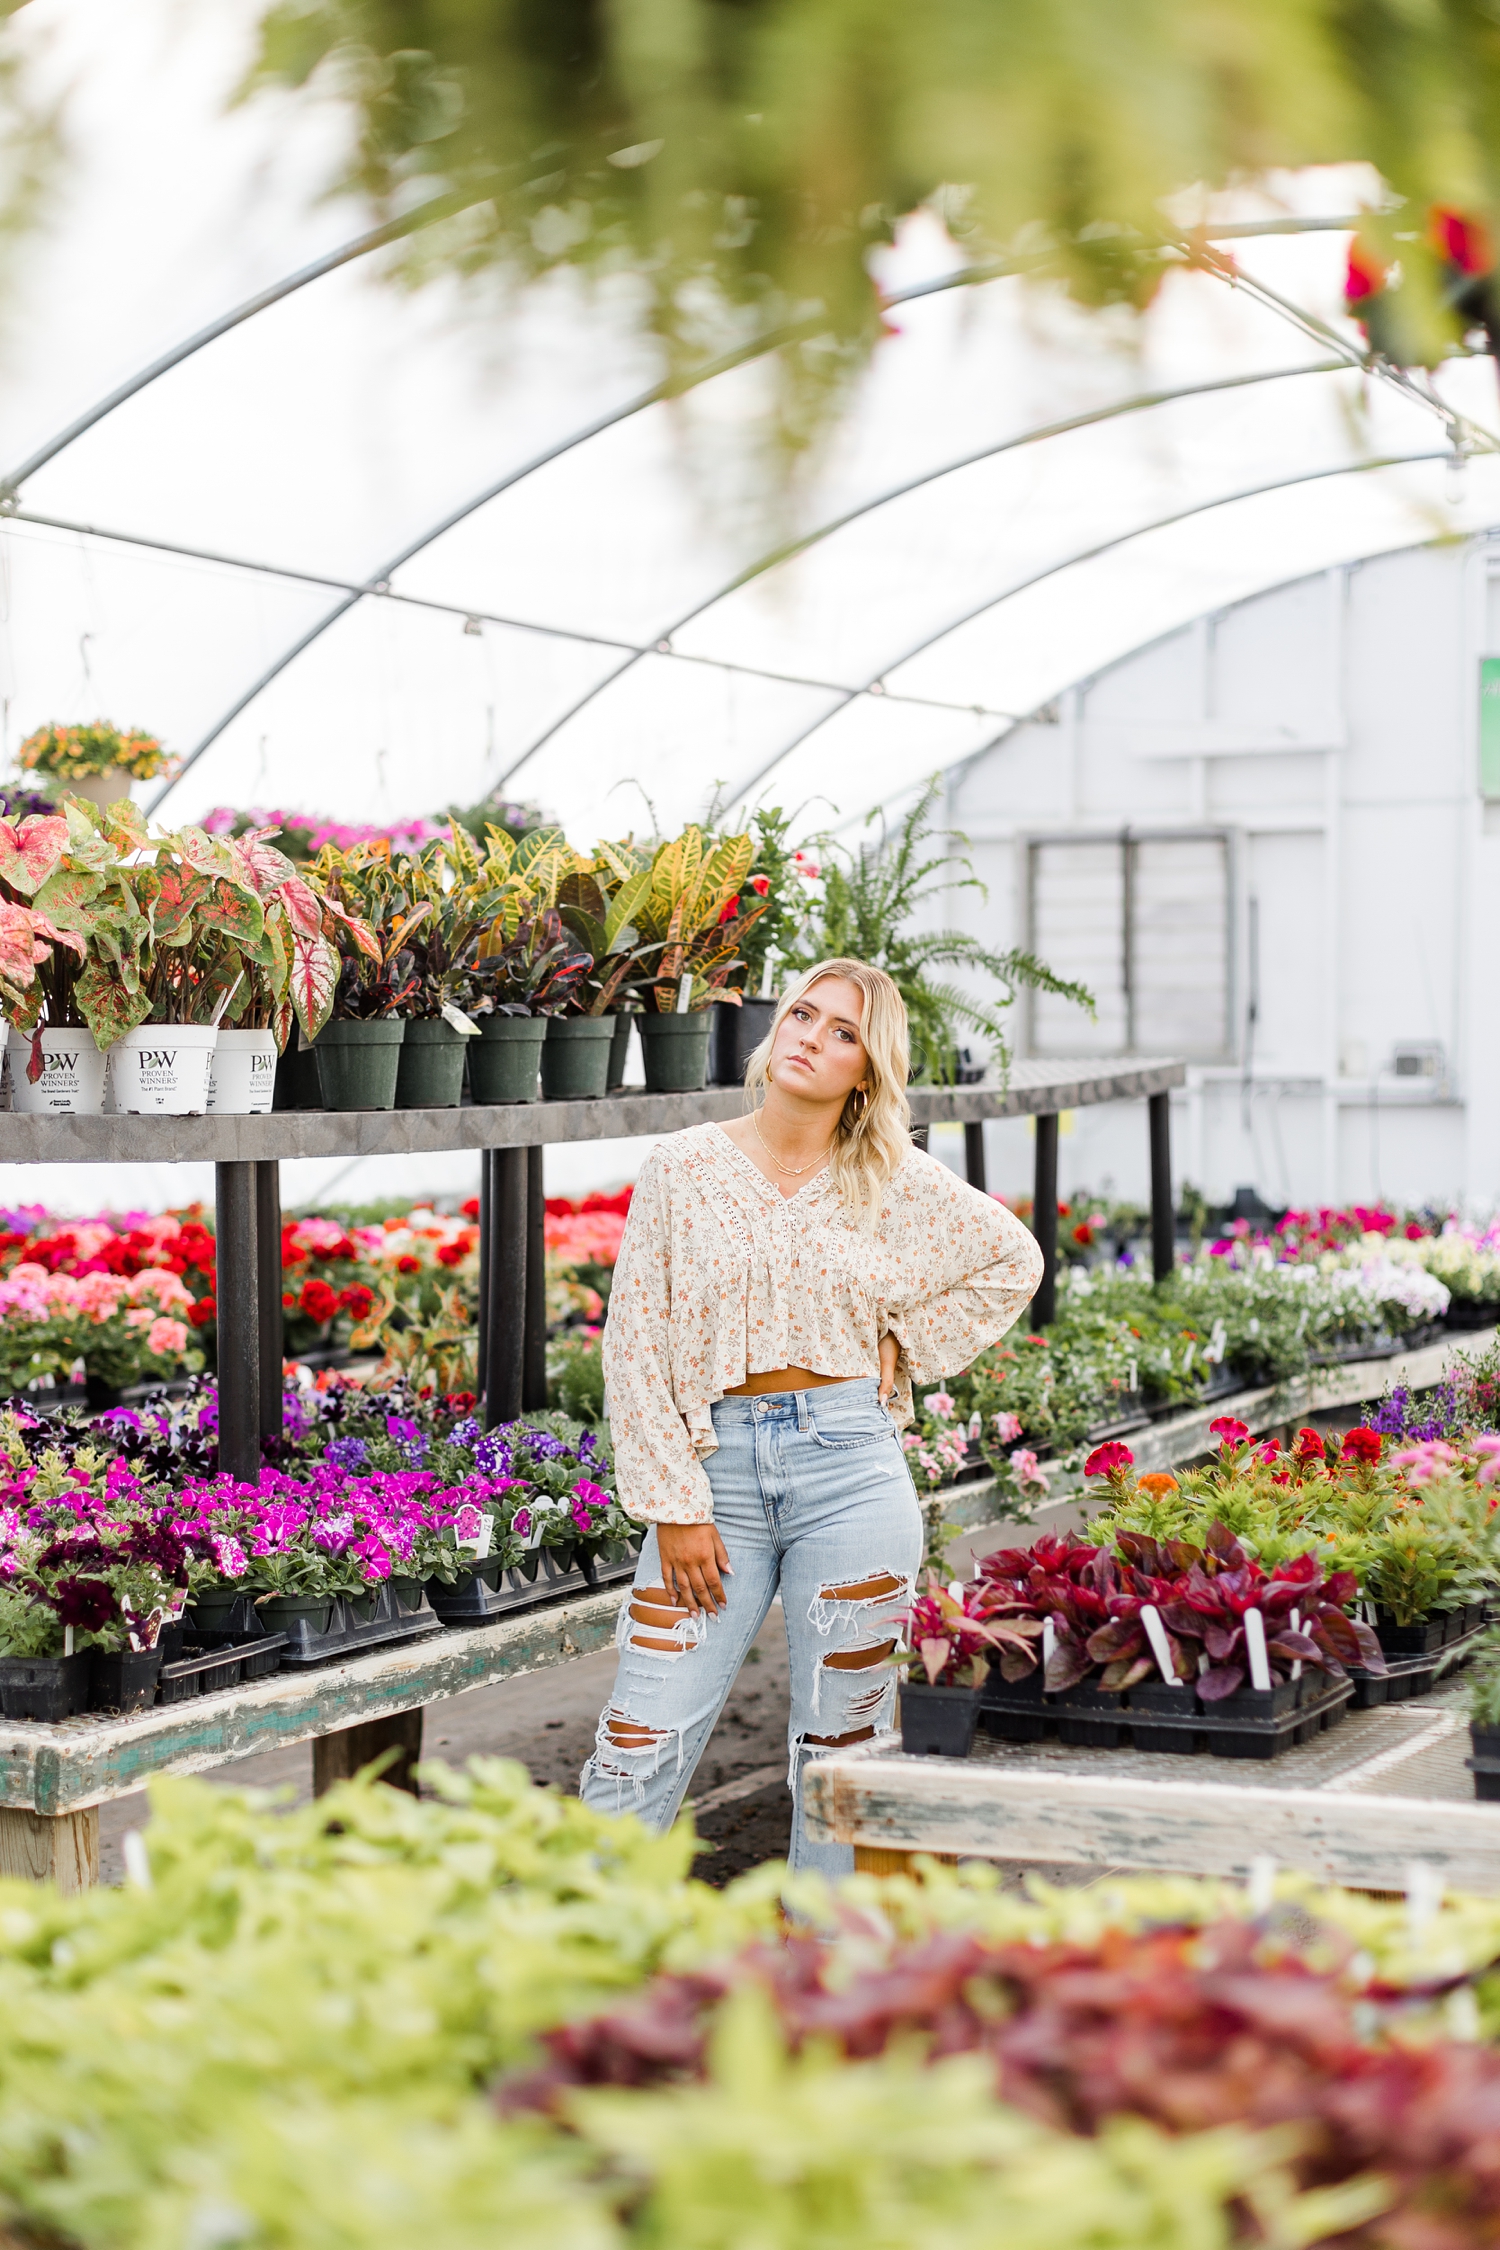 Senior spokesmodel Jenna poses inside a greenhouse full of luscious plants | CB Studio